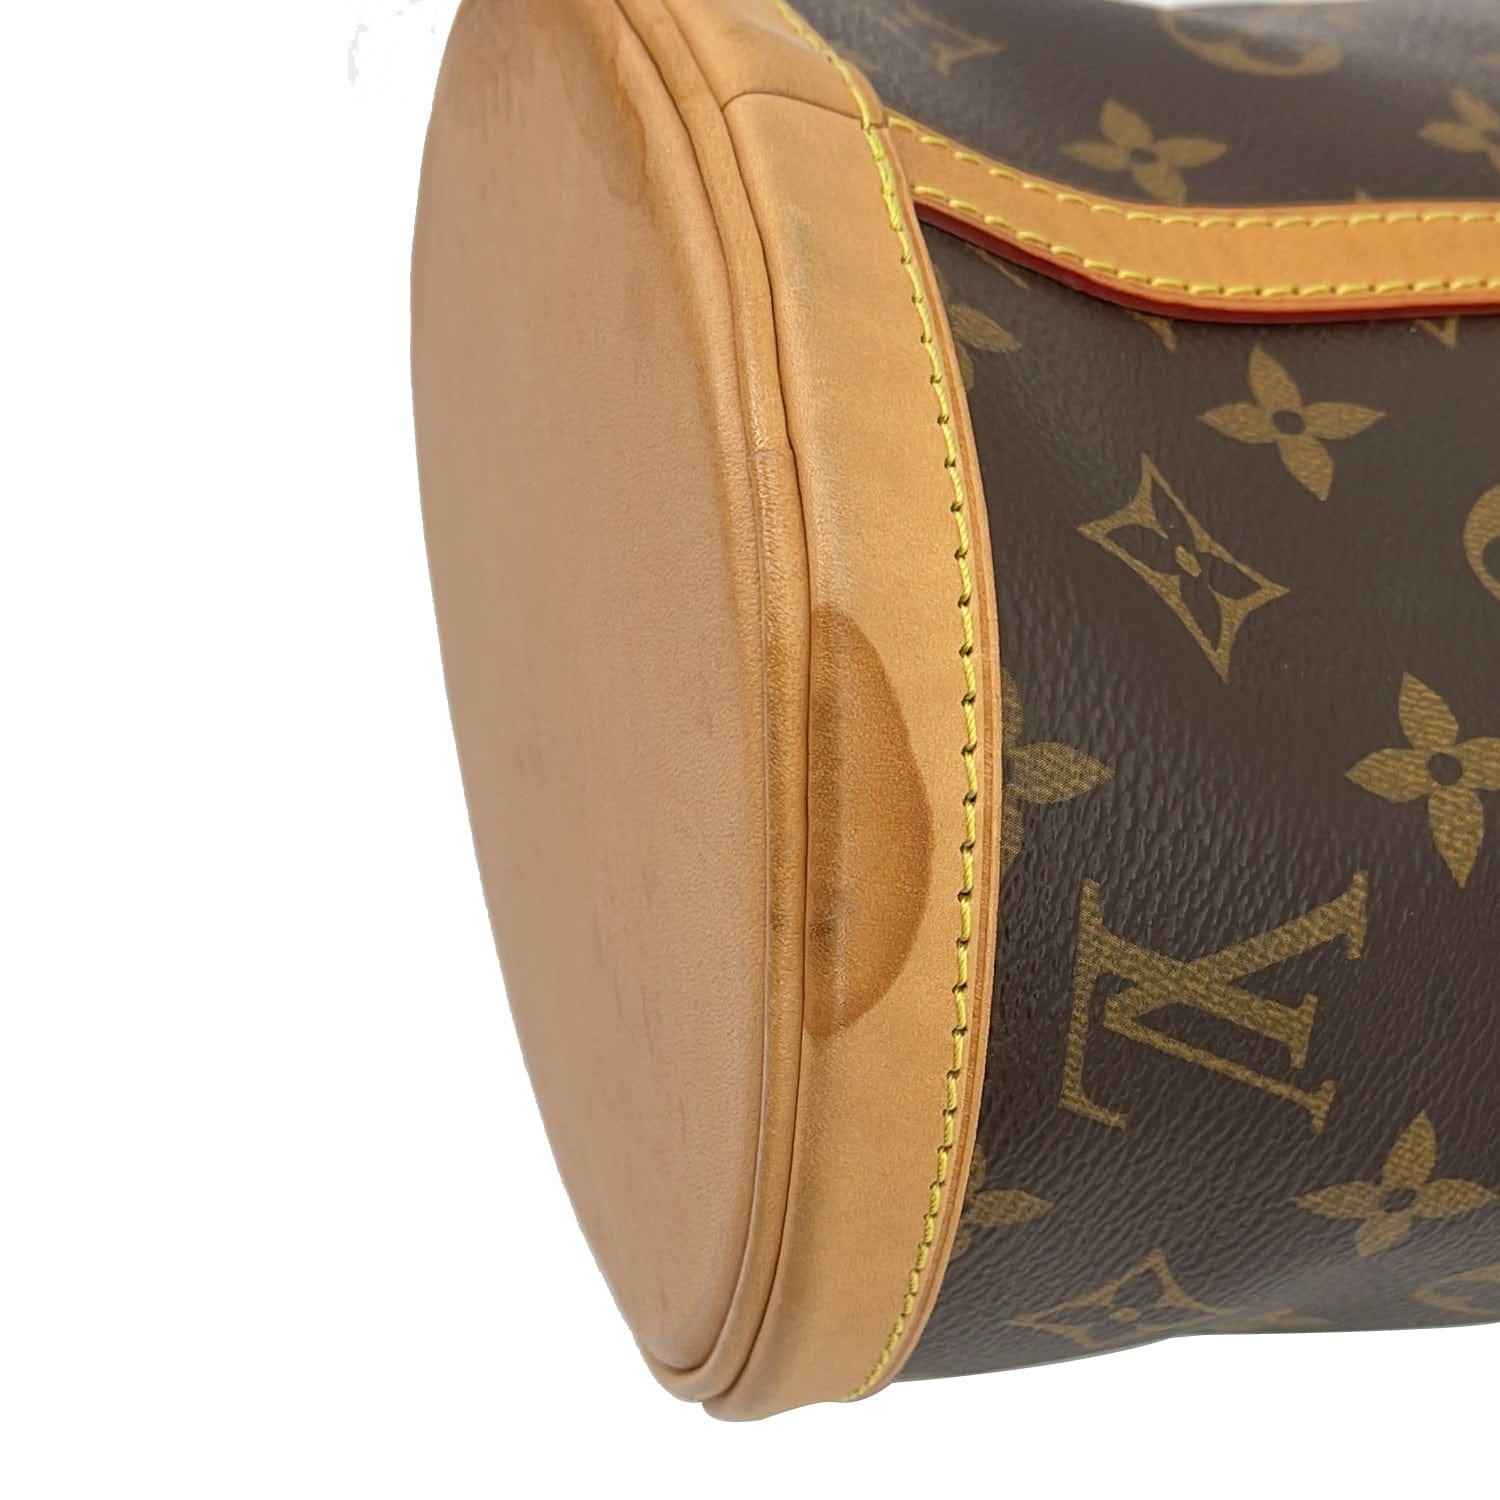 Louis Vuitton Cruiser Handbag Monogram Canvas 50 Brown 23187713